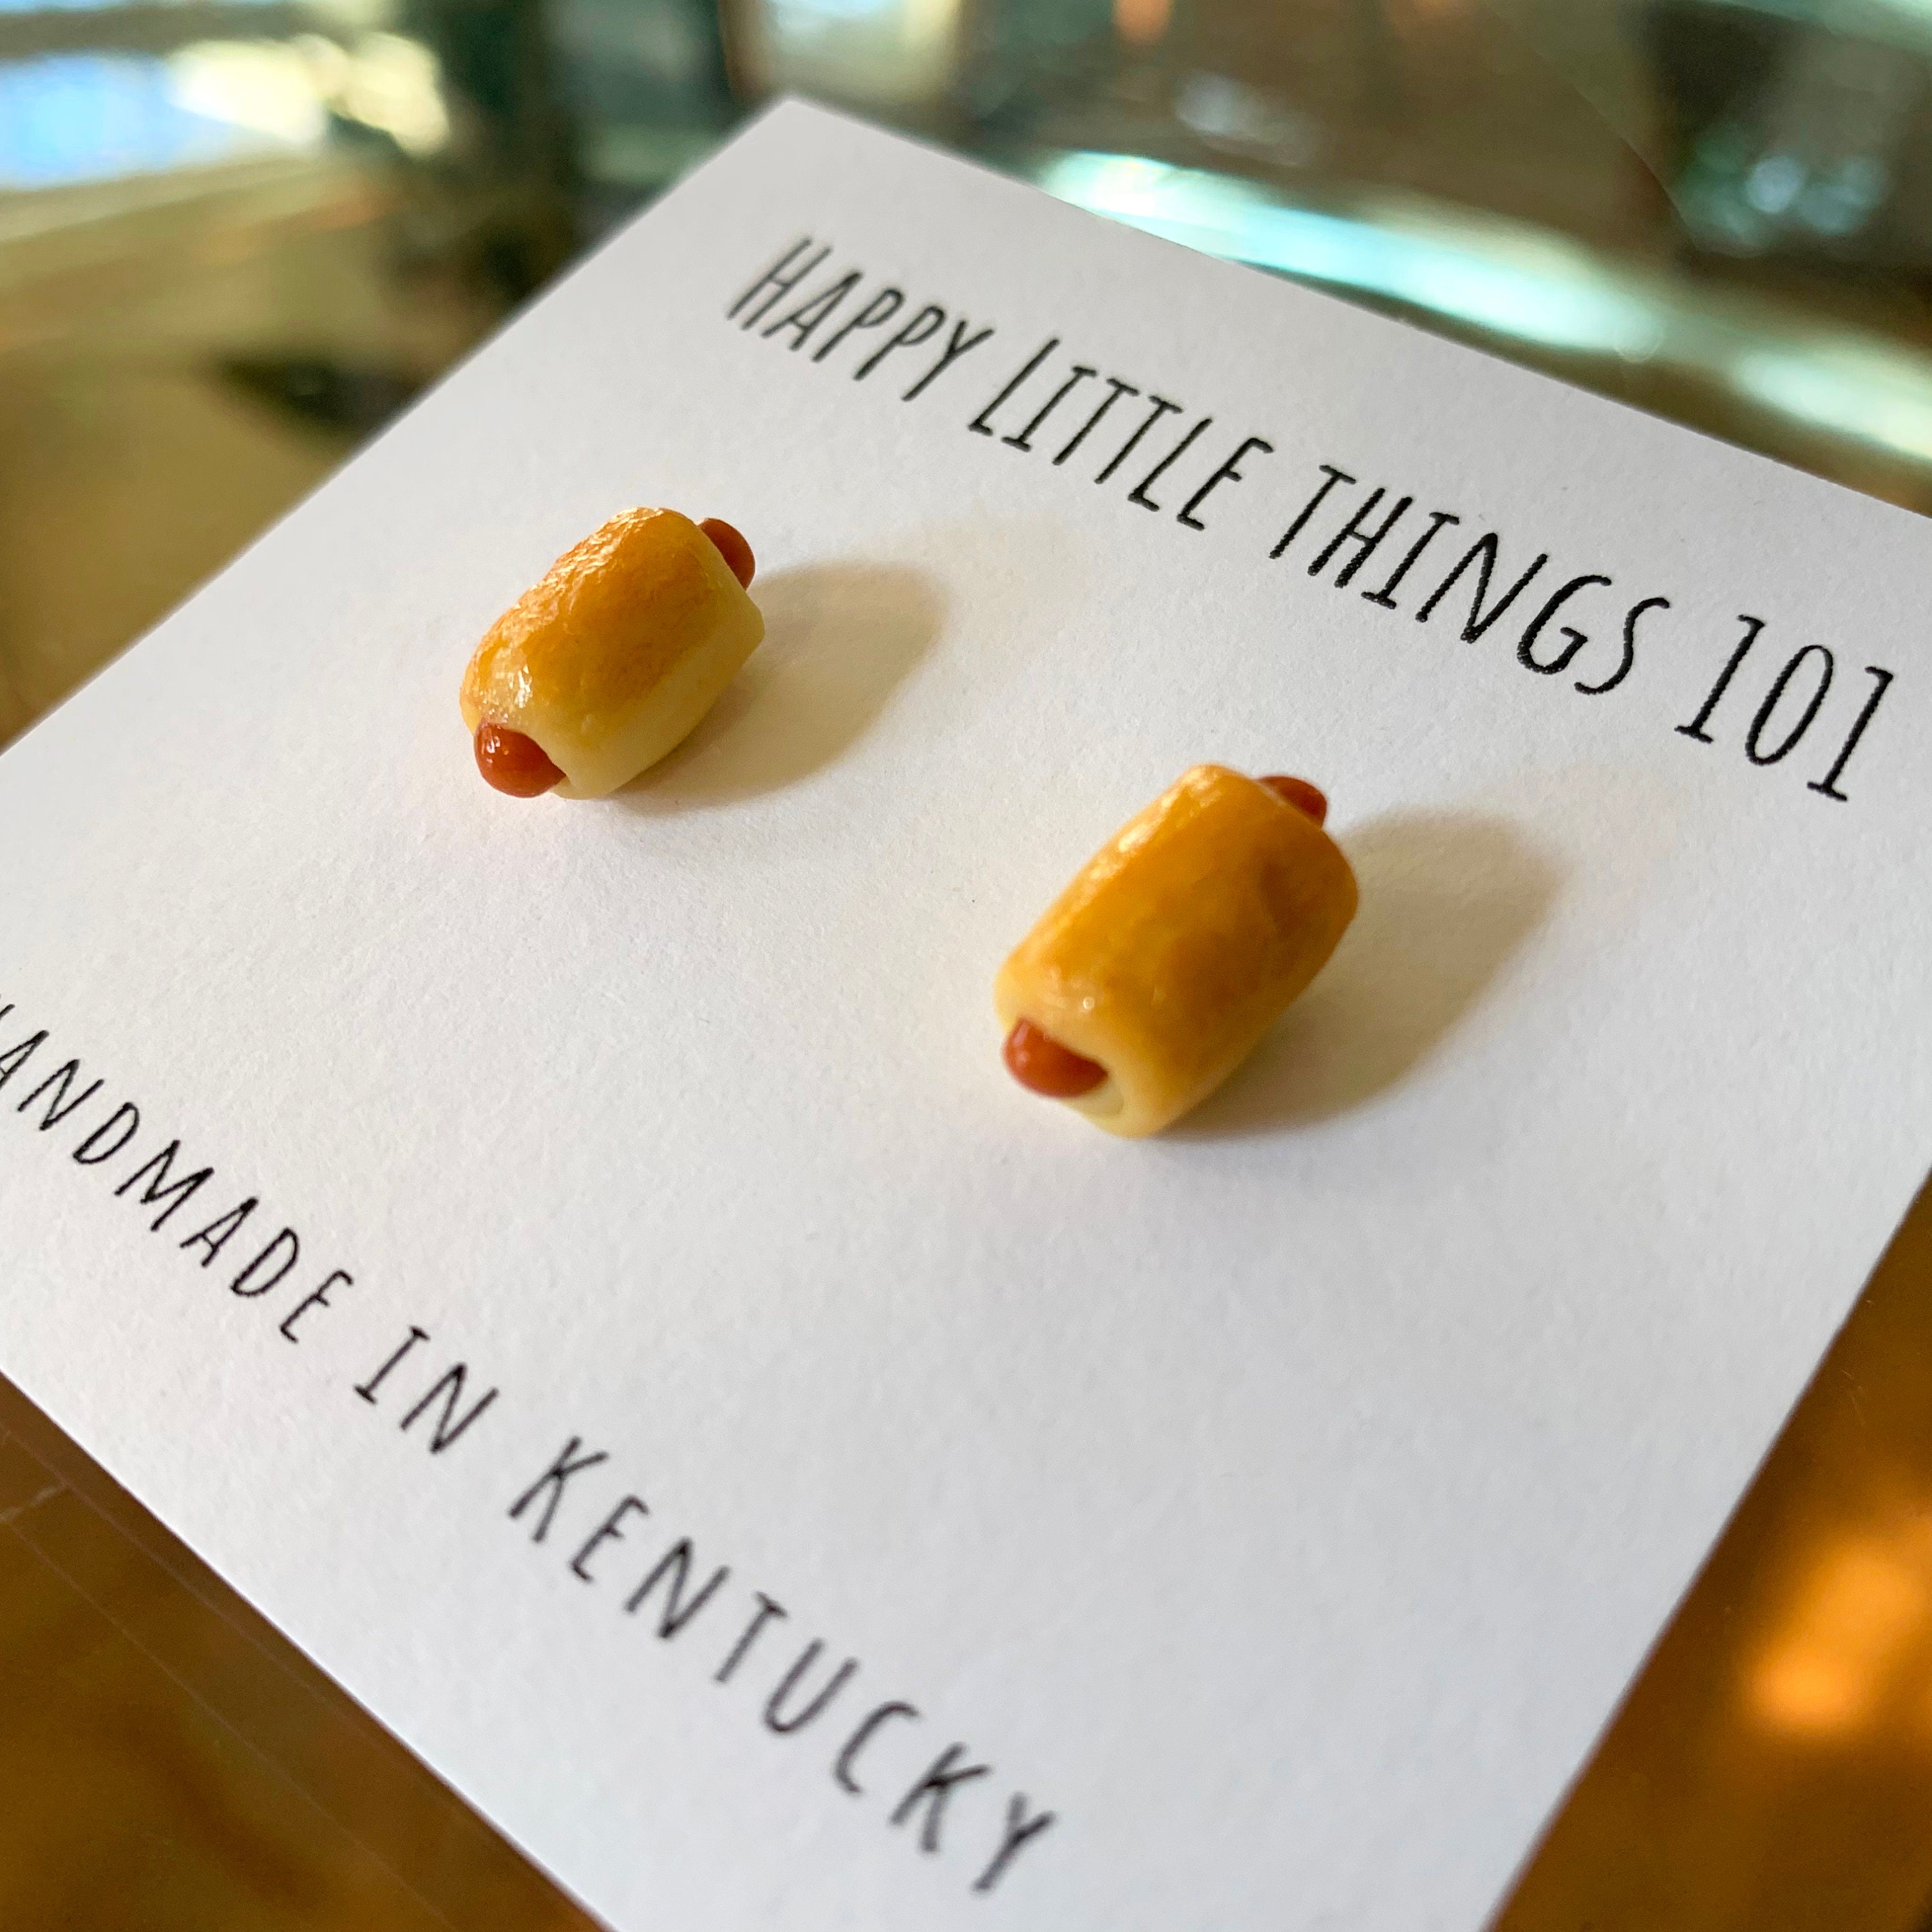 Oscar Mayer or Hormel Bacon Earrings Mini Brands Tiny Food Jewelry